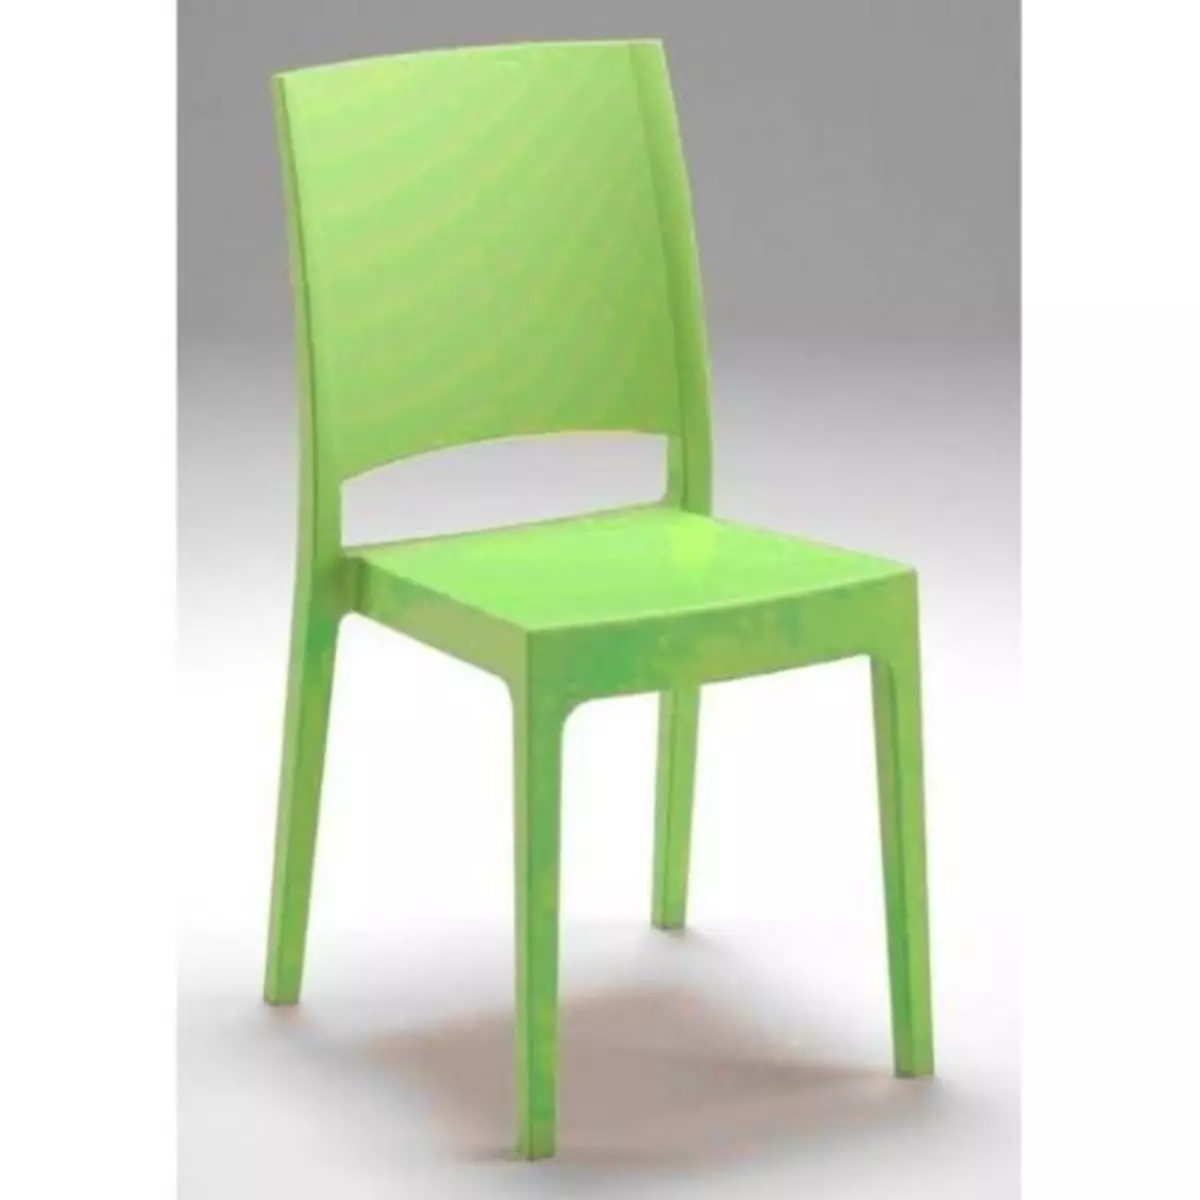 MARKET24 Chaise de jardin FLORA ARETA - Lot de 4 - Vert anis - Résine - Design